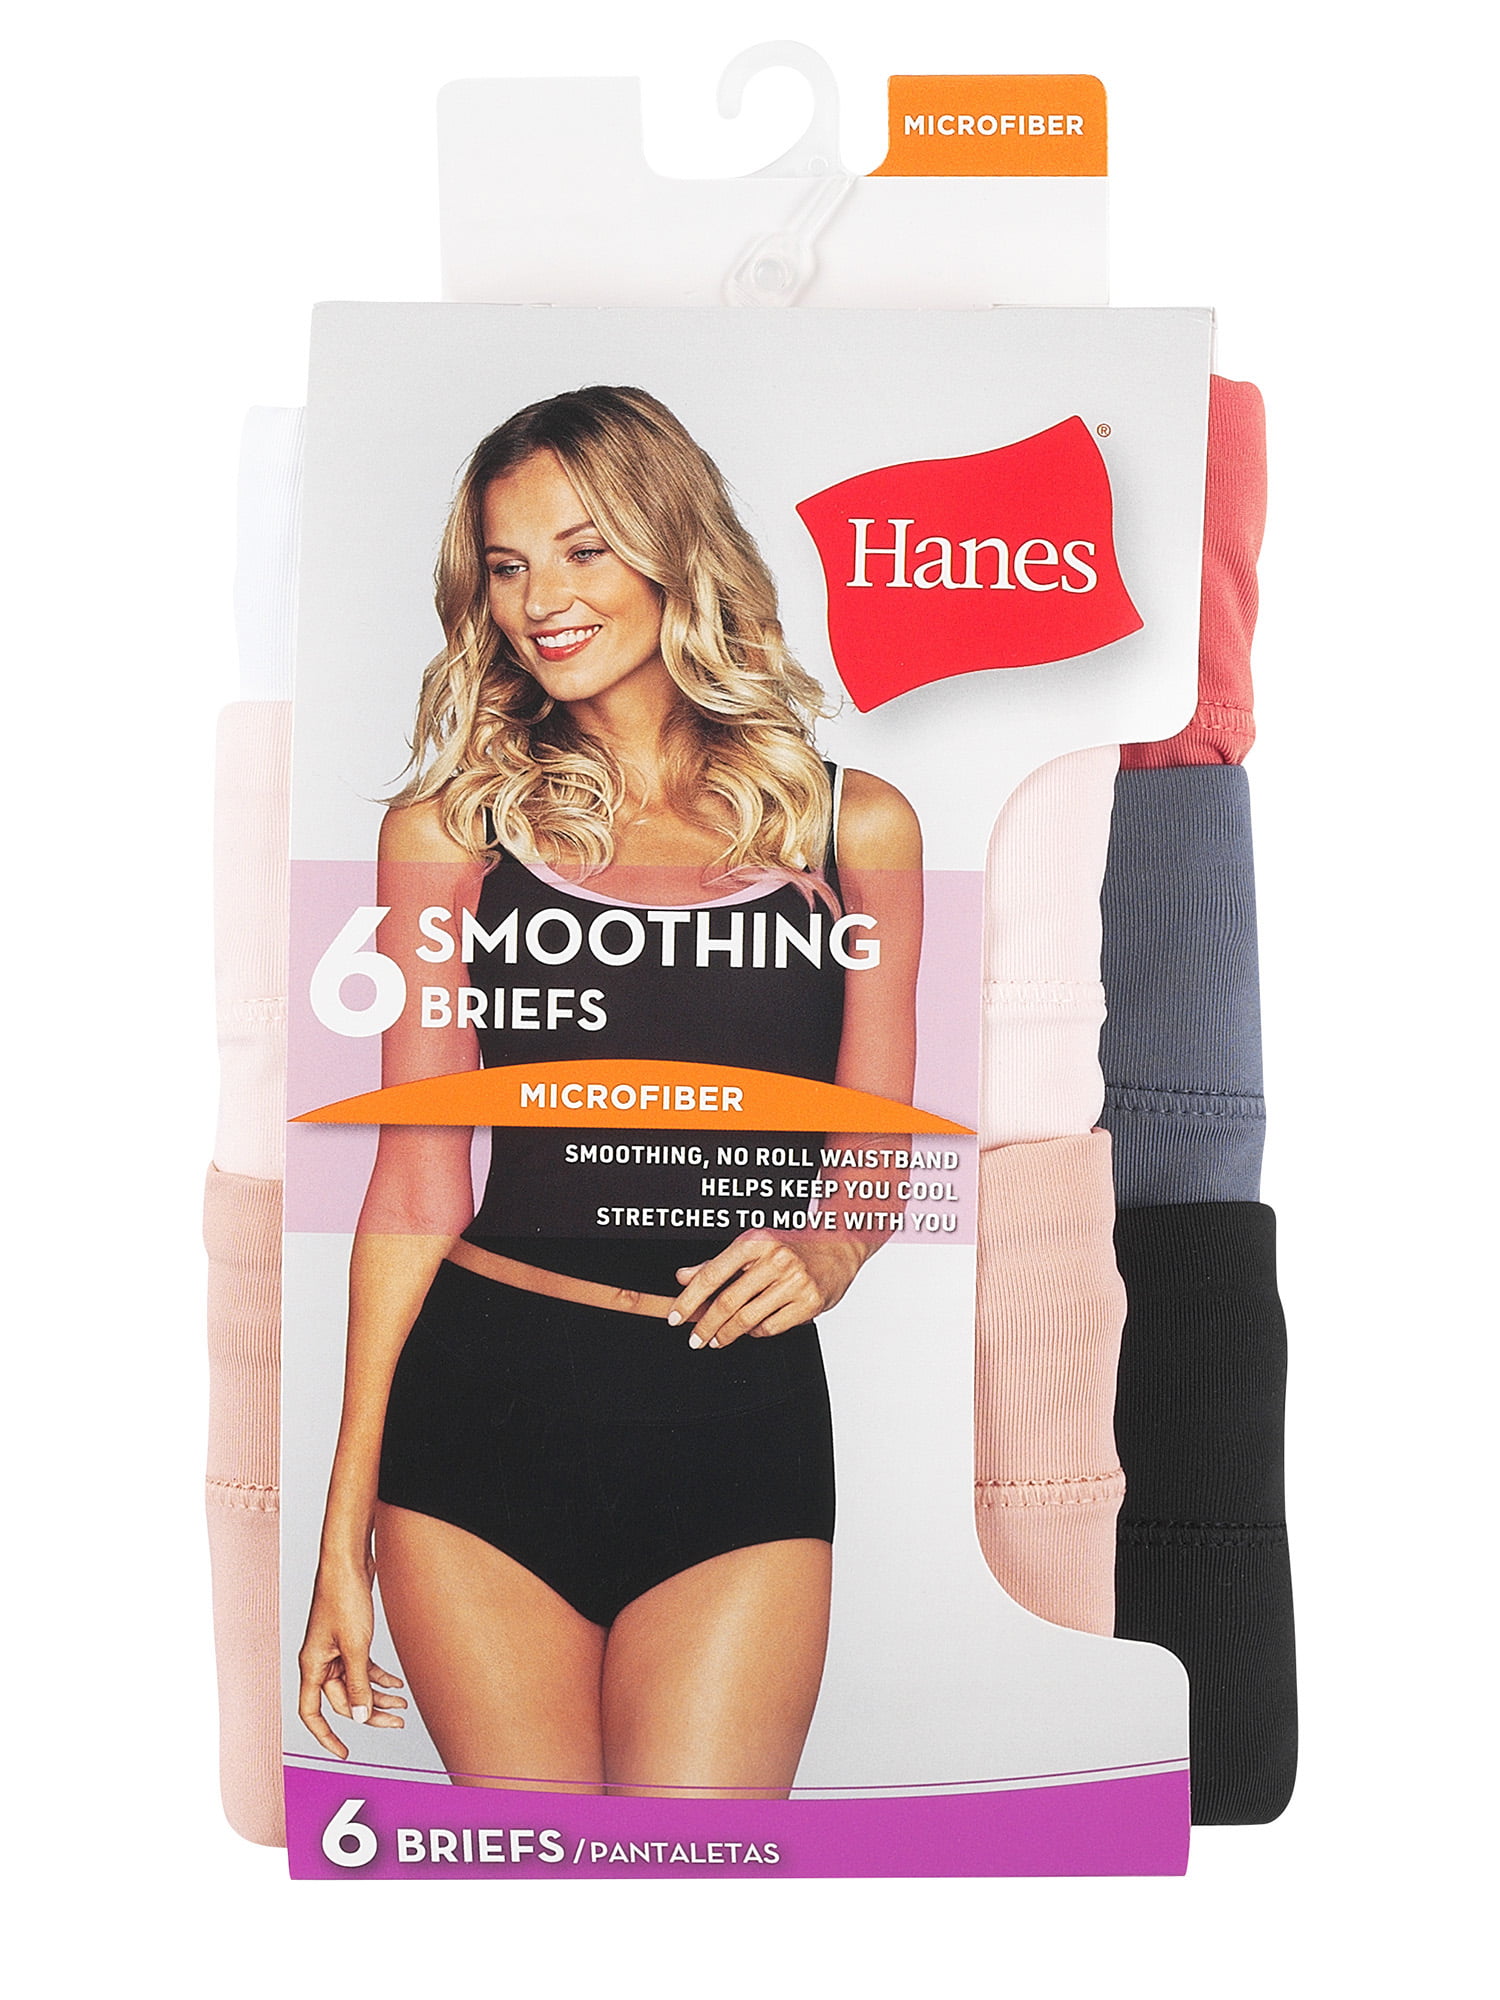 Hanes Women's Signature Smoothing Microfiber Brief Underwear, 6-Pack